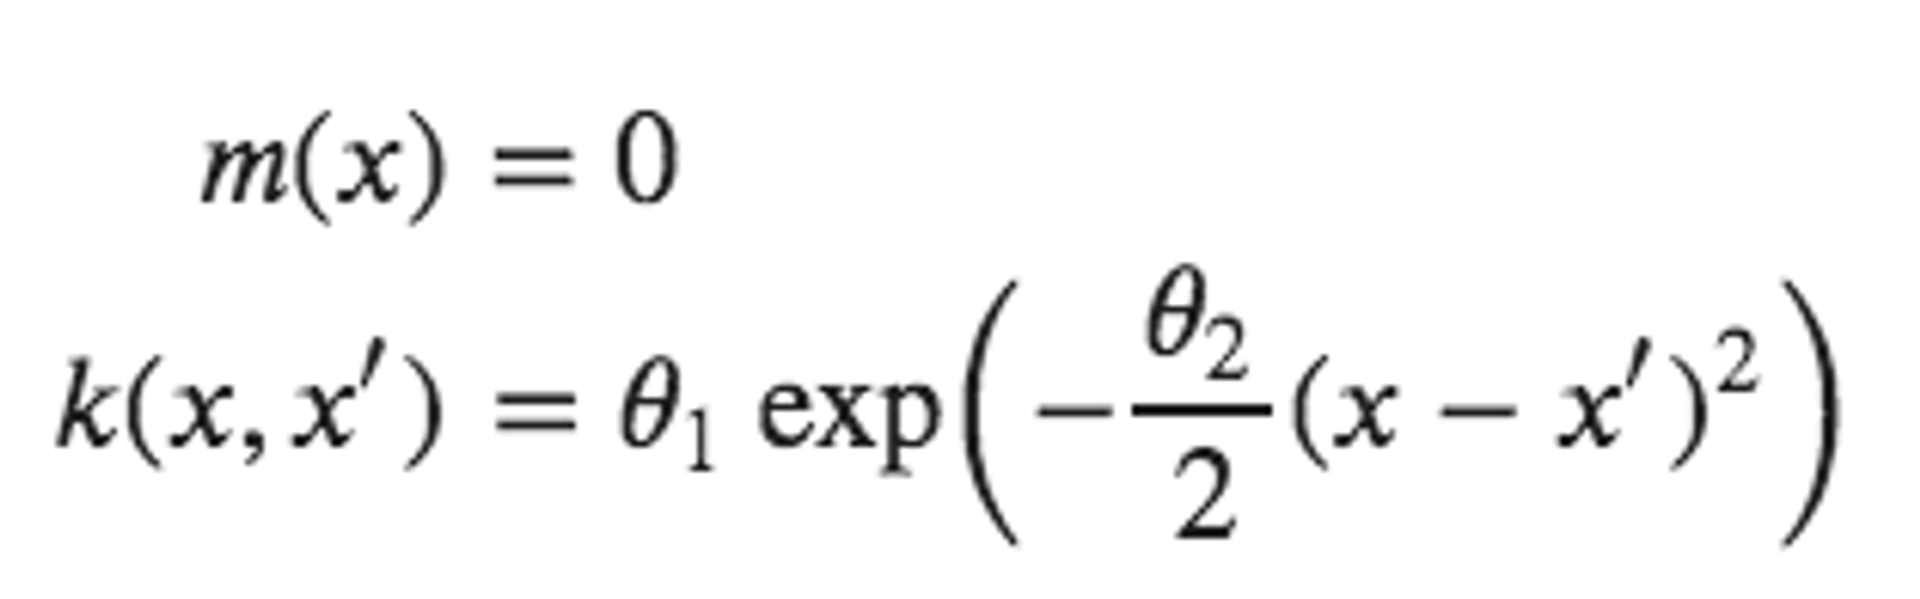 Gaussian process equation